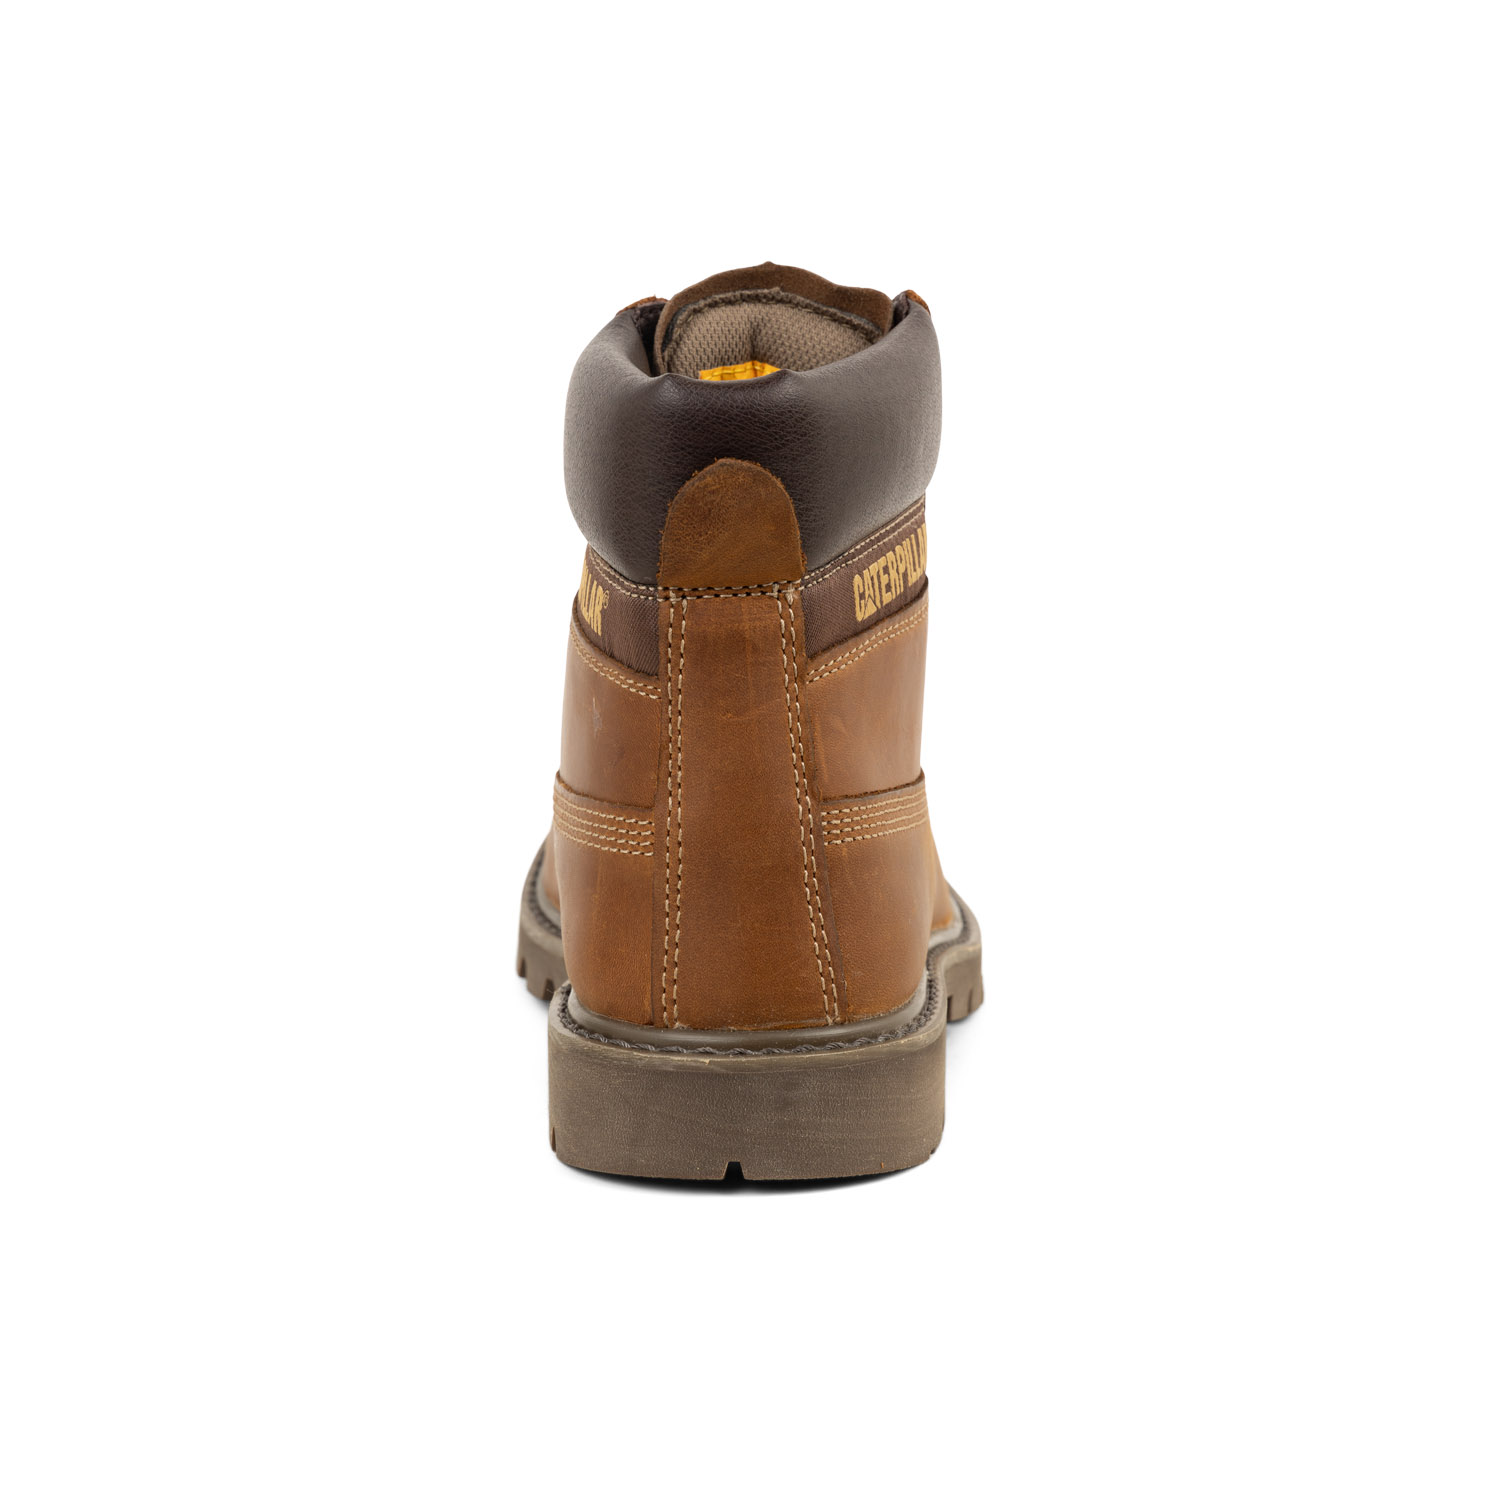 03 - COLORADO 2.0 - CATERPILLAR - Boots et bottines - Cuir